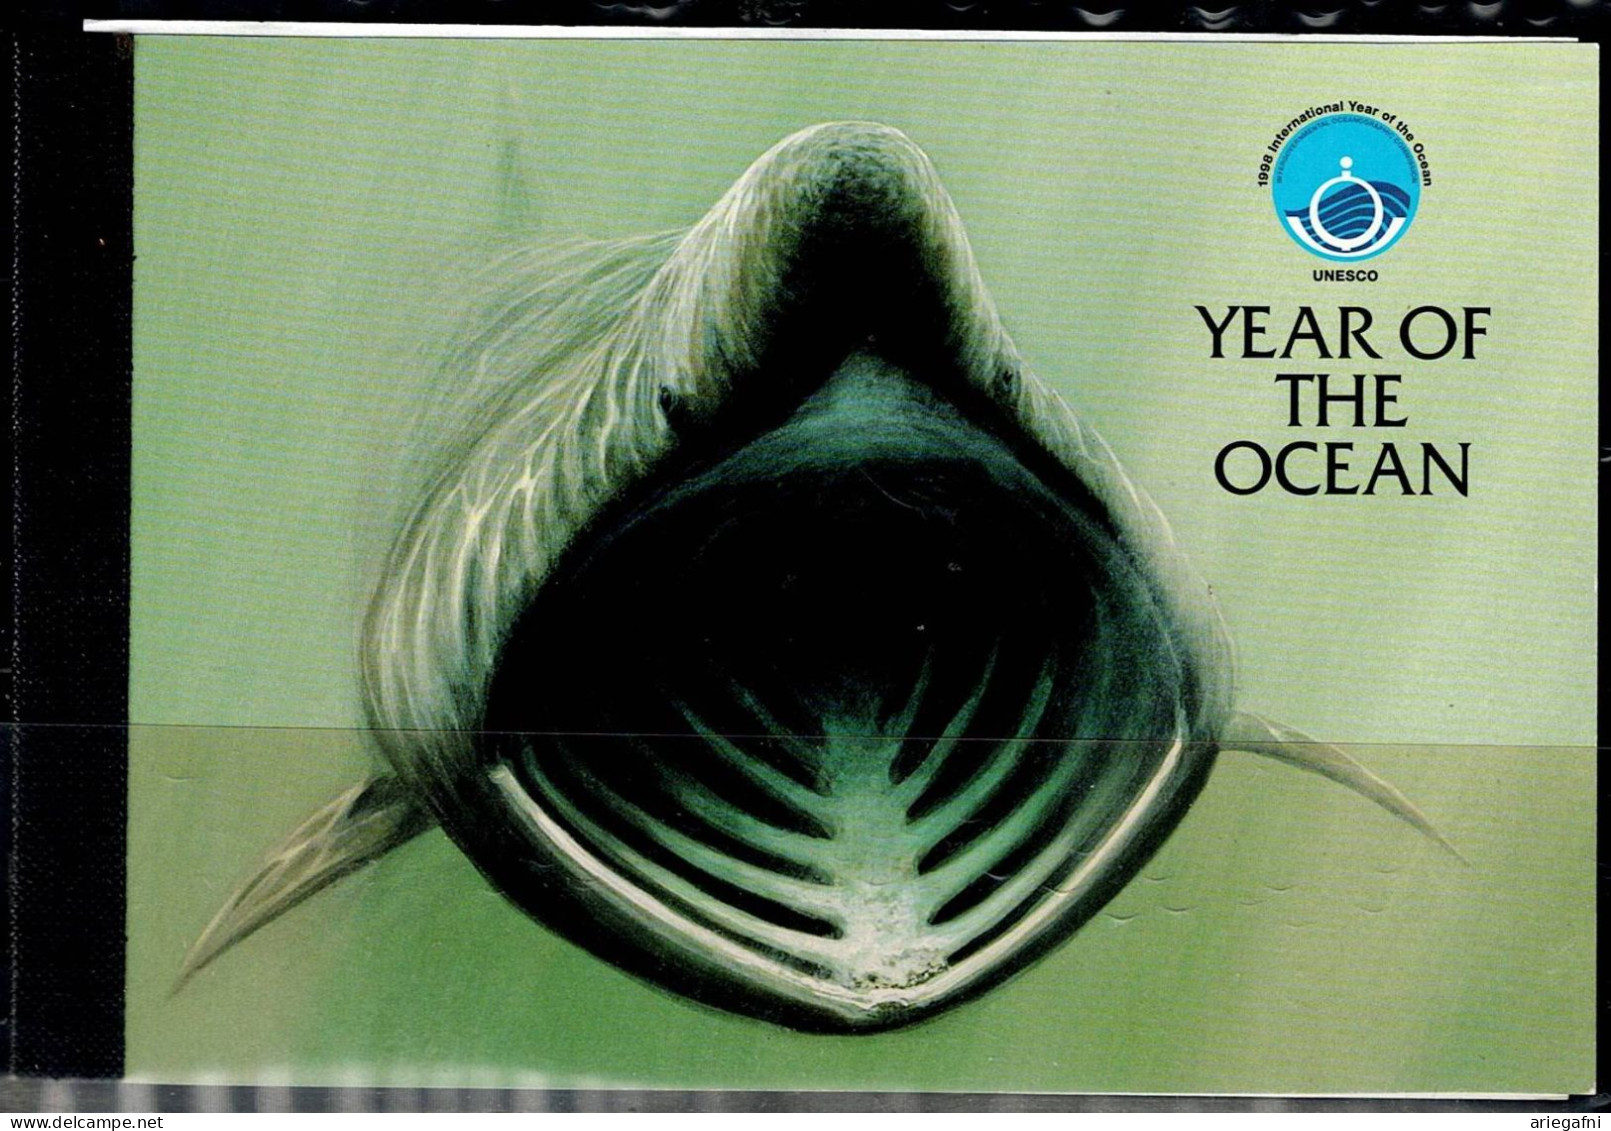 ISLE OF MAN 1998 UNESCO INTERNATIONAL YEAR OF THE OCEAN BOOKLET MNH VF!! - Man (Ile De)